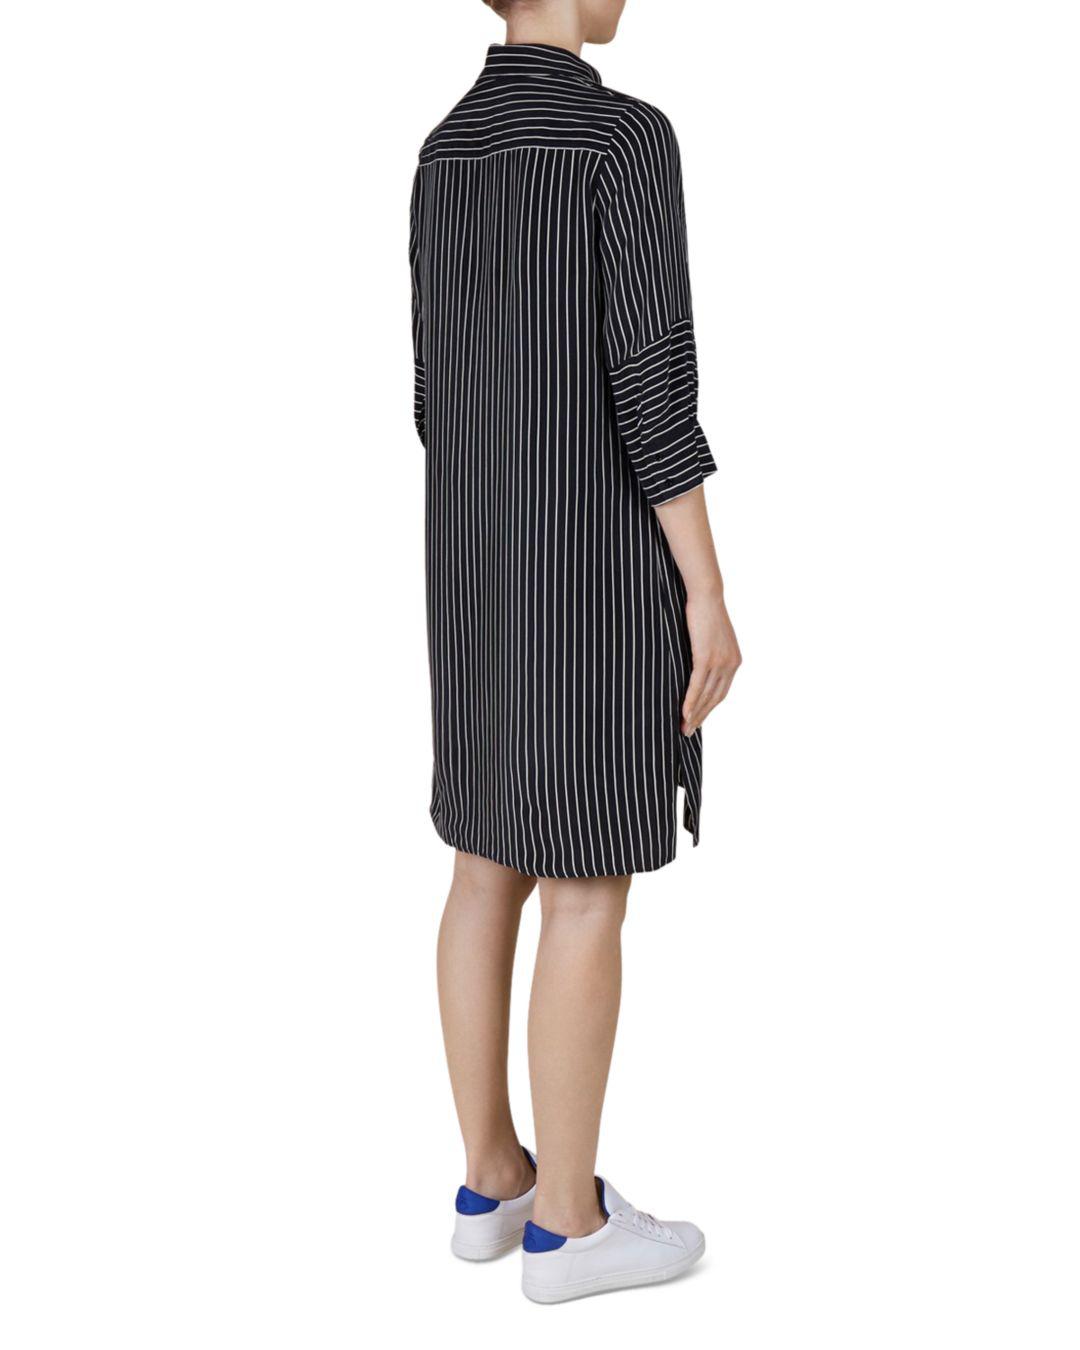 Gerard Darel Diana Striped Shirt Dress in Black - Lyst